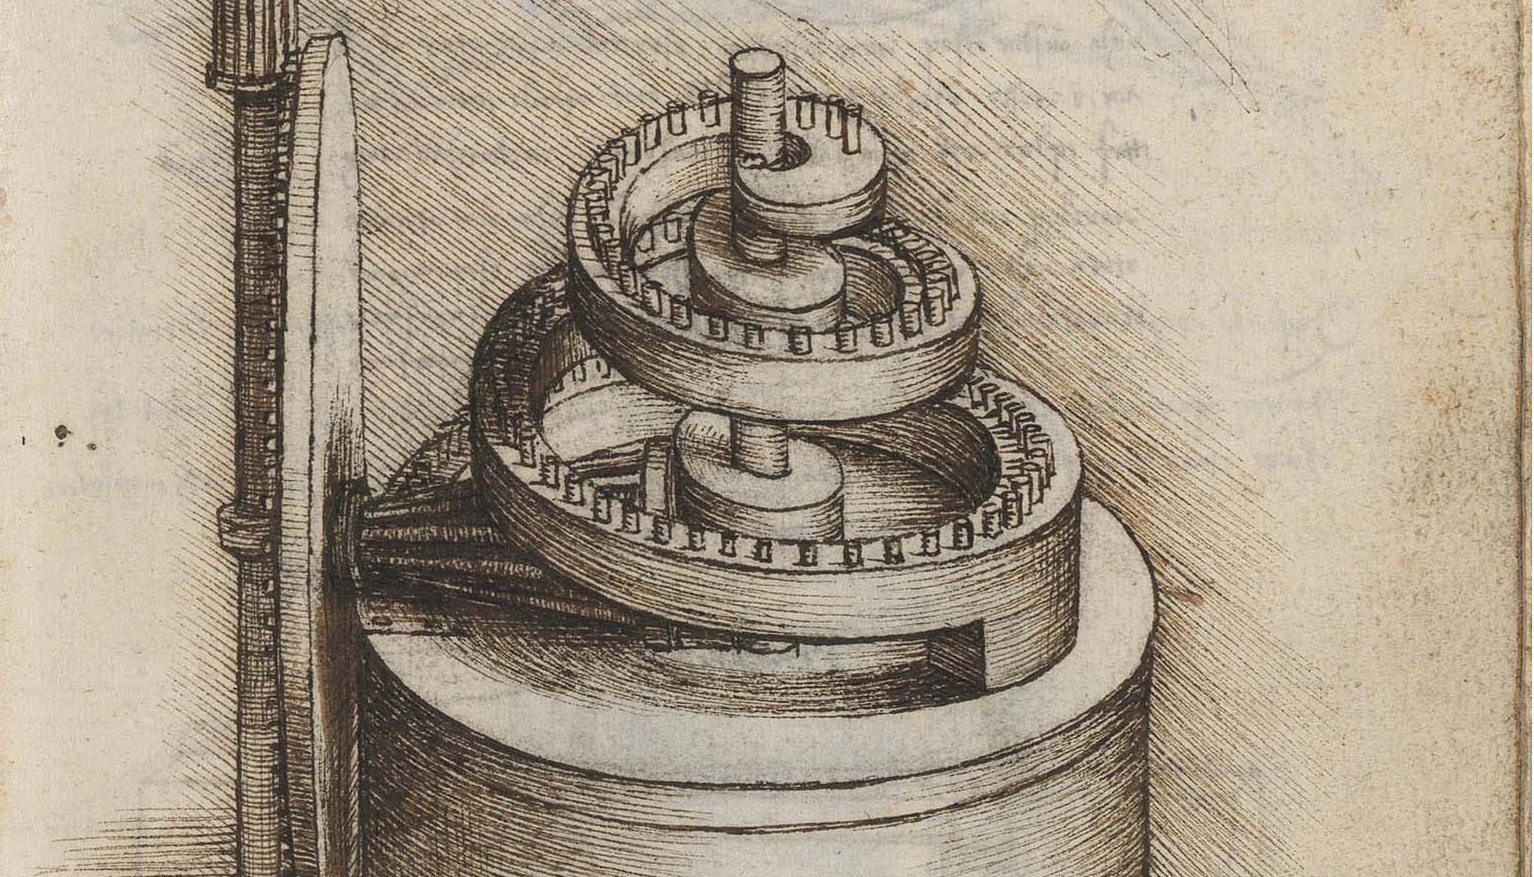 'Tratado de estatica y mechanica'. Leonardo da Vinci. MSS 8937.